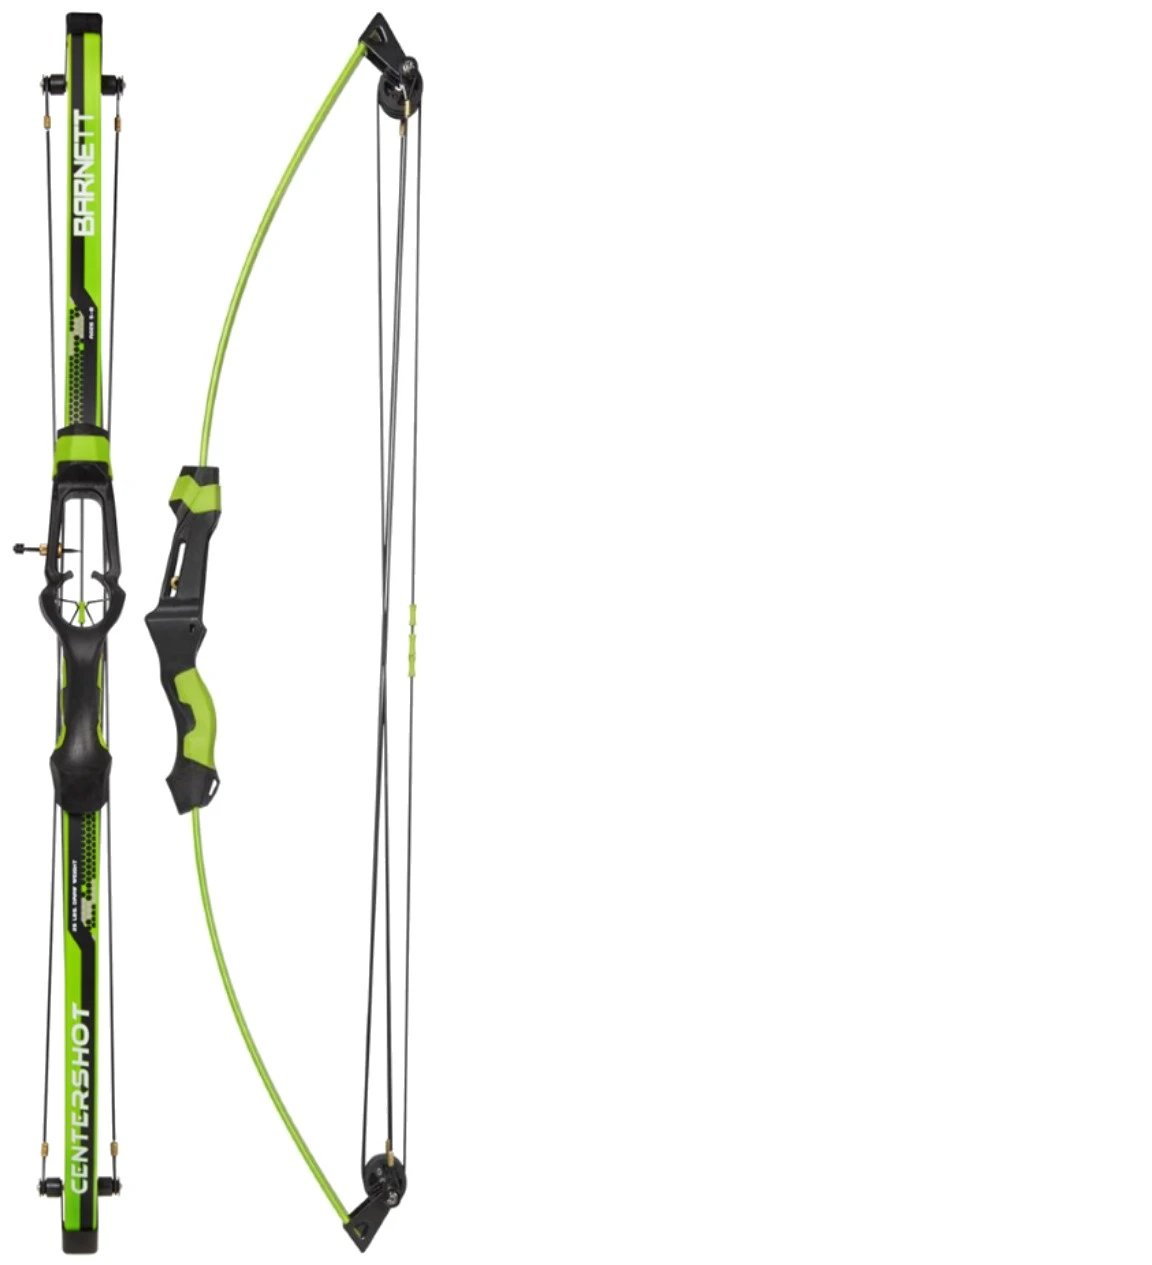 Barnett Centreshot Compound Archery Set - 17lb -  - Mansfield Hunting & Fishing - Products to prepare for Corona Virus